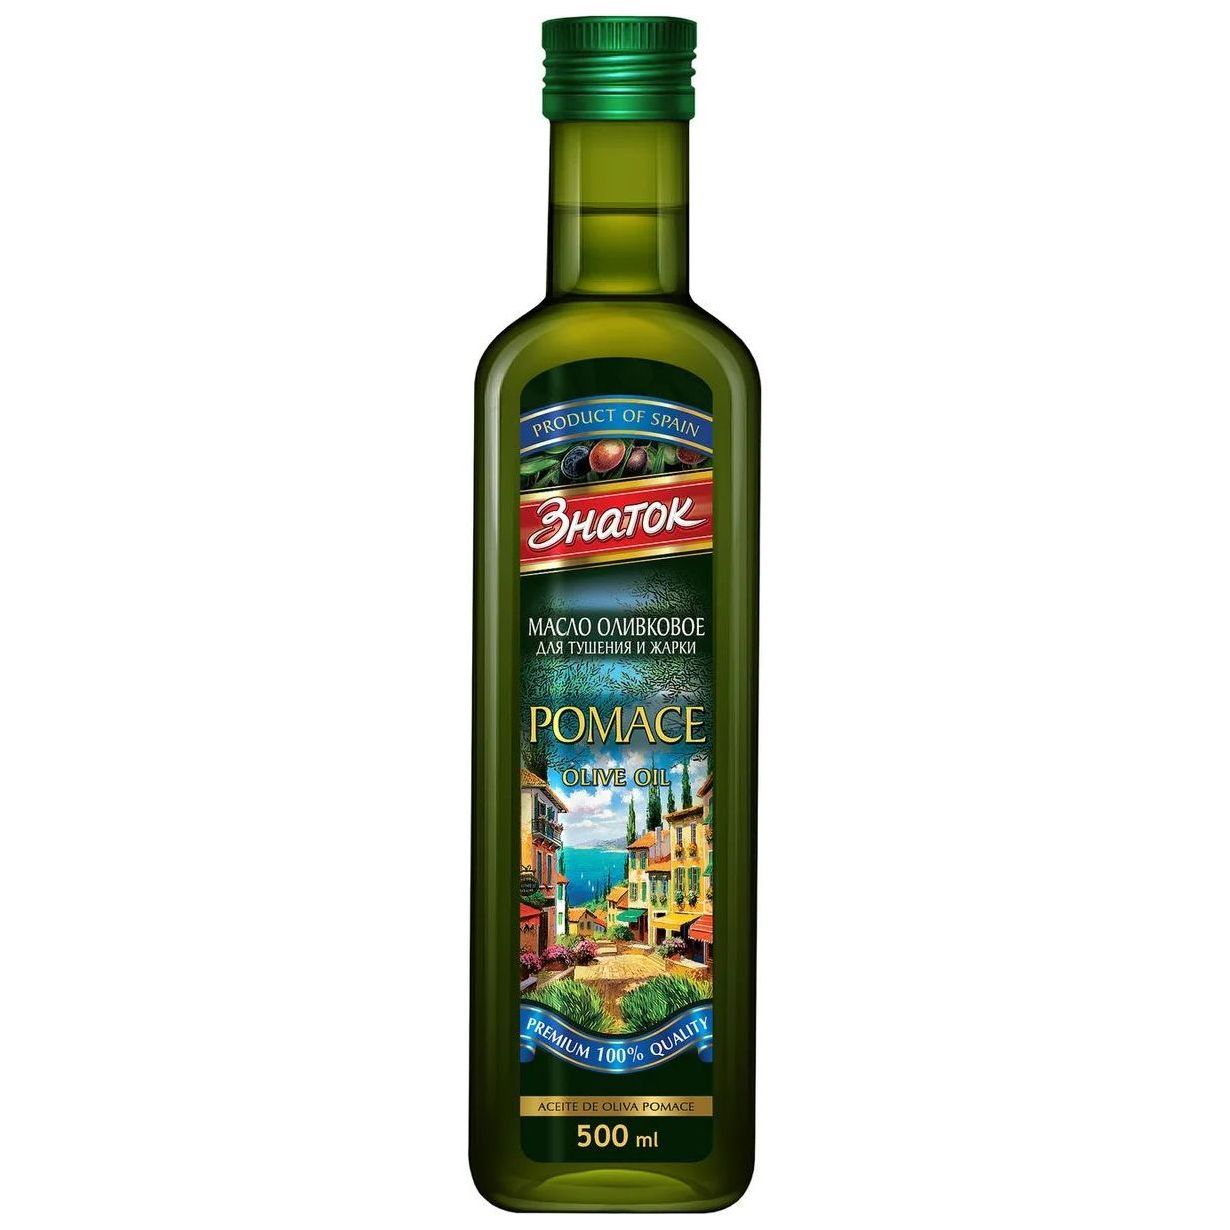 Масло оливковое 250мл. Иберика оливковое масло 250 ml. Знаток оливковое масло Pomace 250мл/12. Оливковое масло Экстра Вирджин. Знаток оливковое масло для тушения и жарки Pomace 250 мл 1/12.